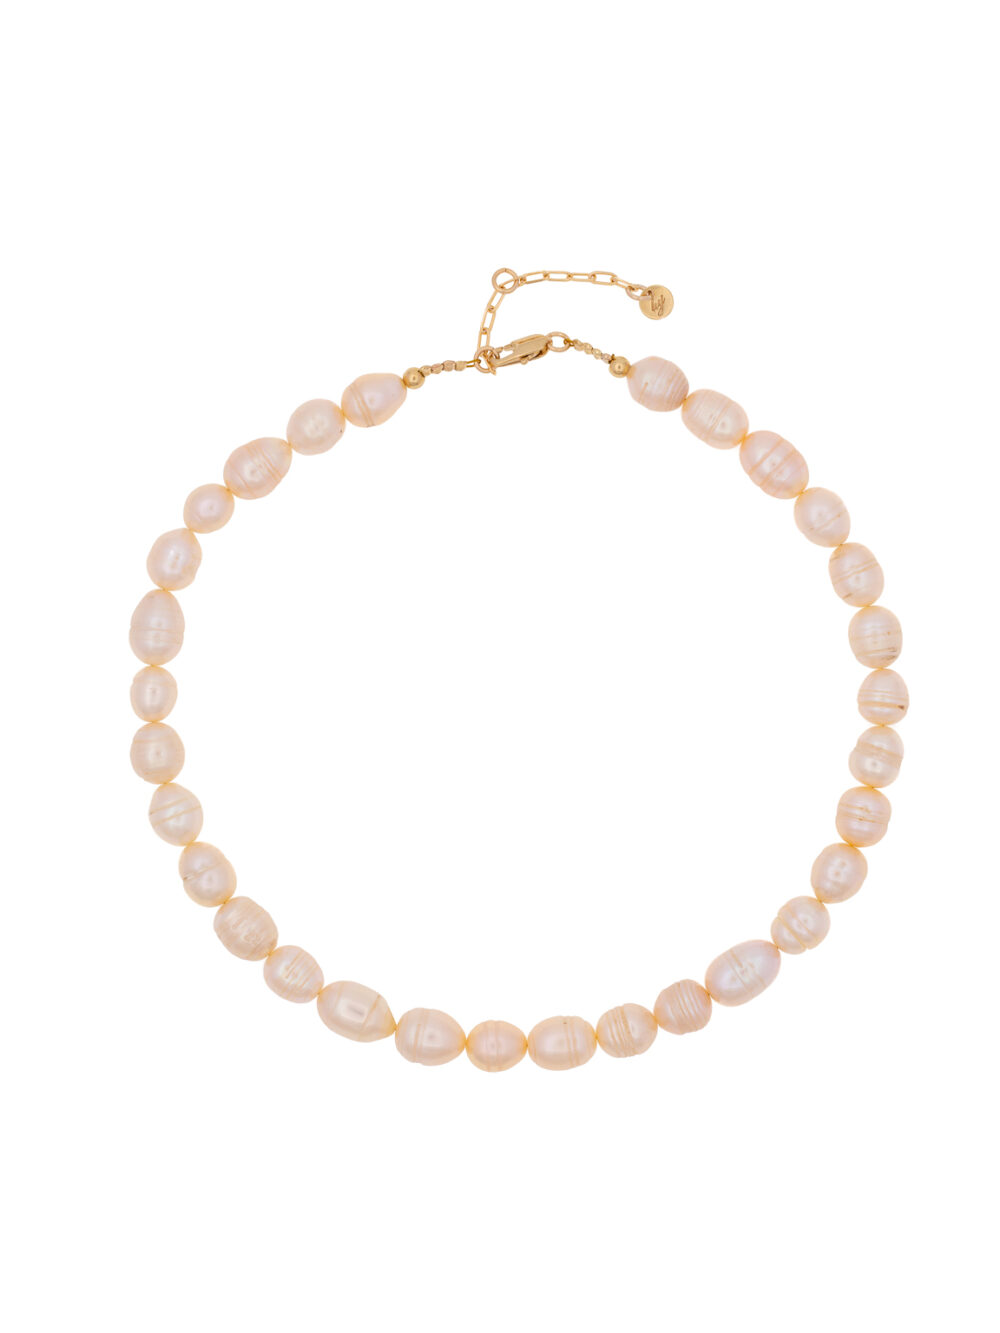 jackie-pearls-necklace-luj-paris-jewels